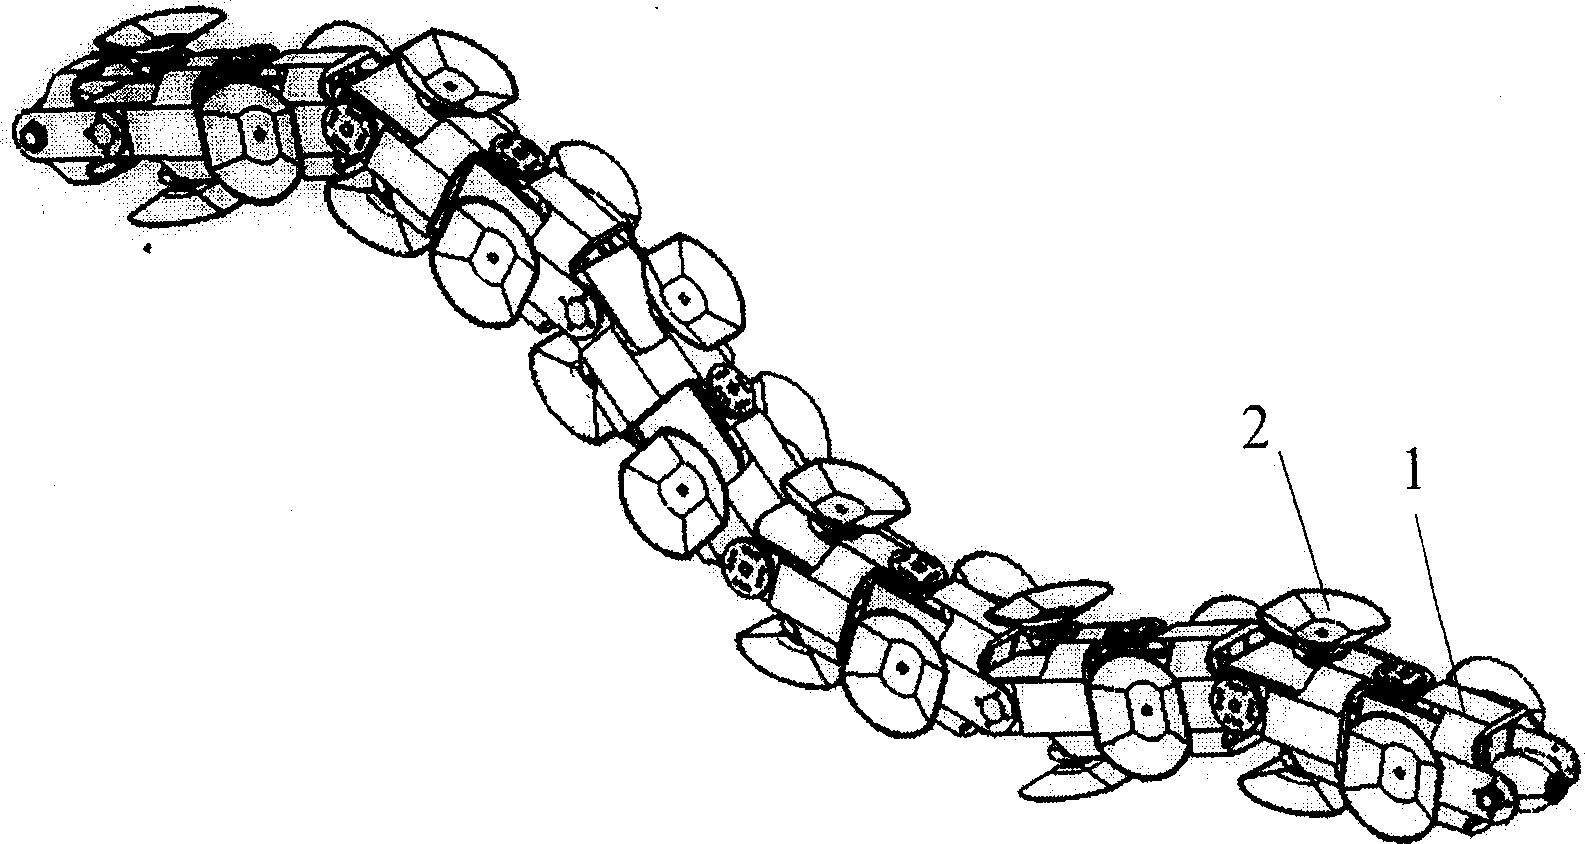 Bionic mechanical reptile